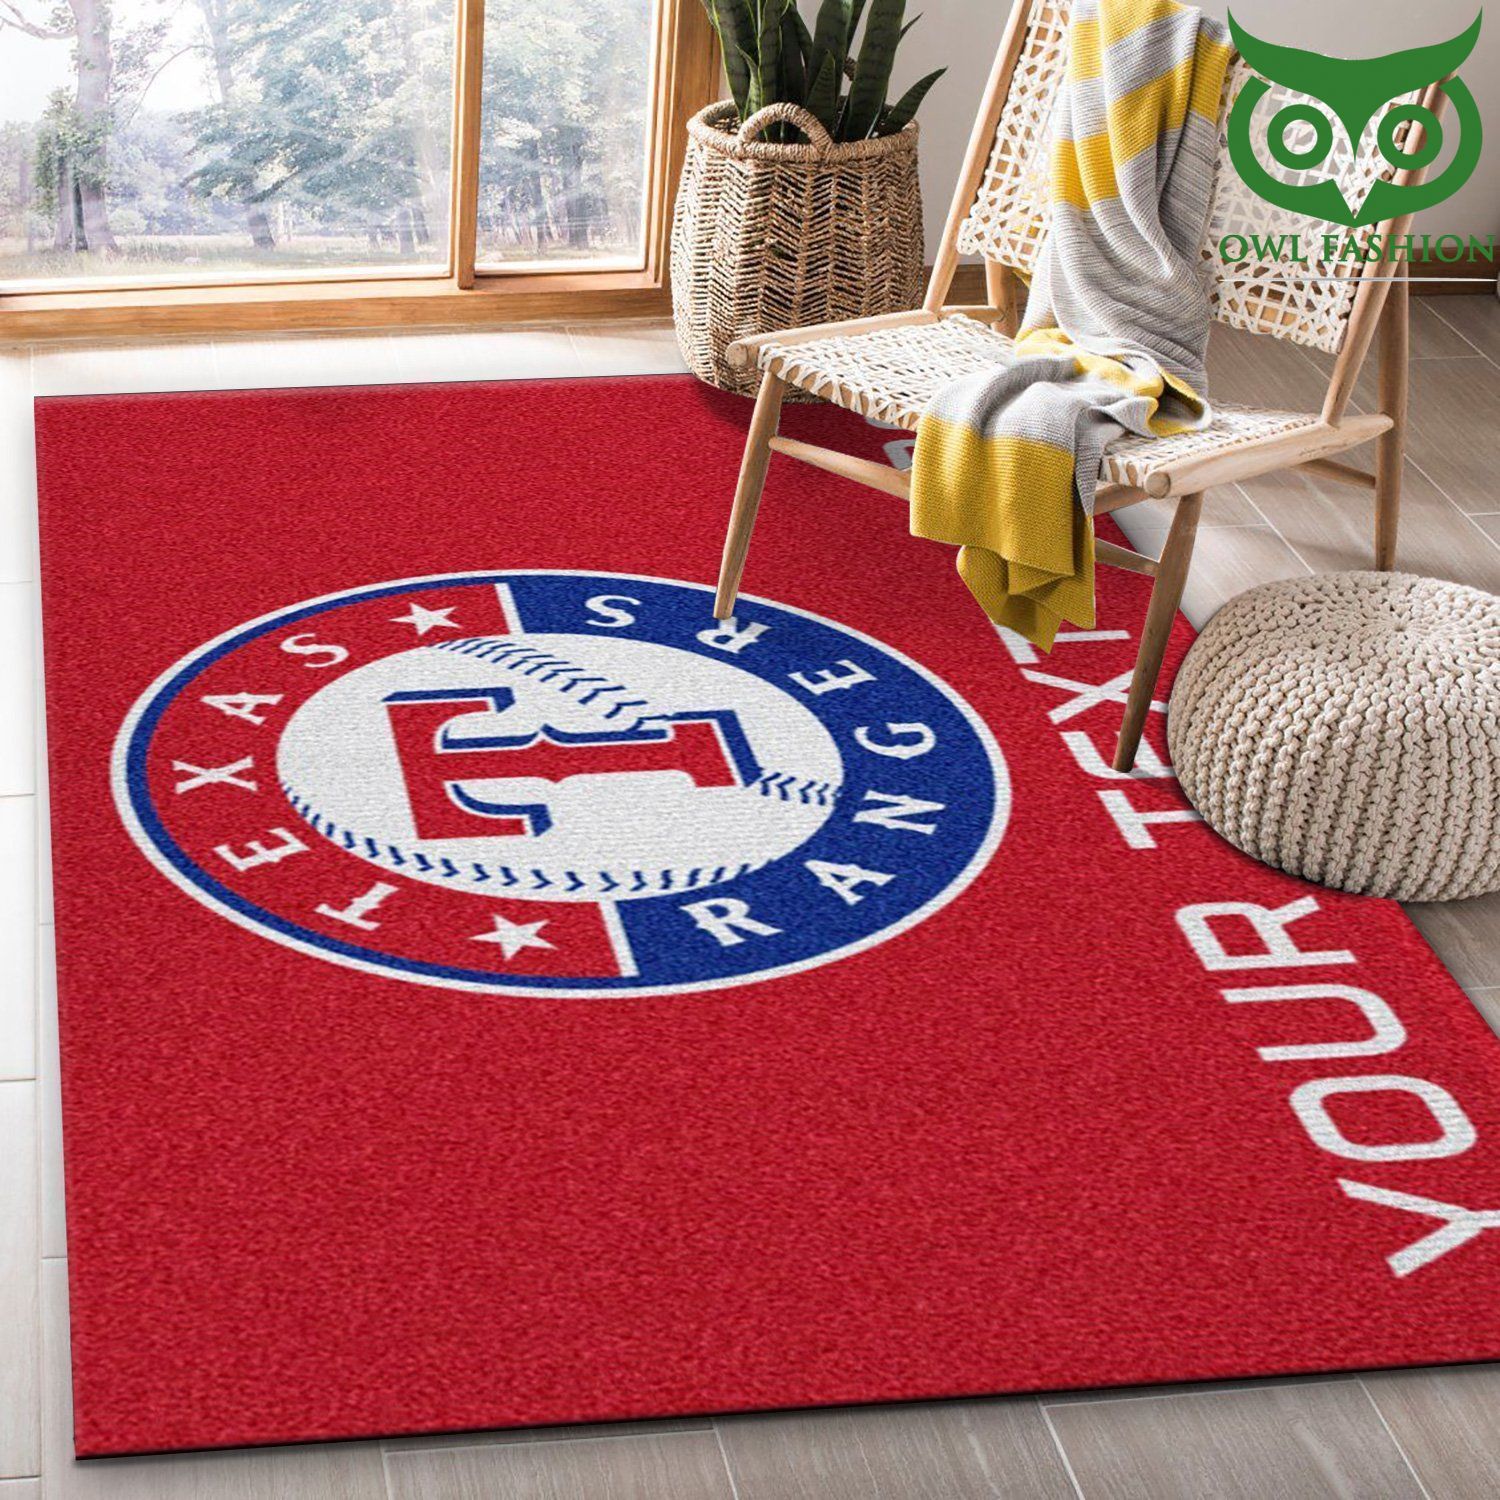 Customizable Texas Rangers MLB Team Logos carpet rug